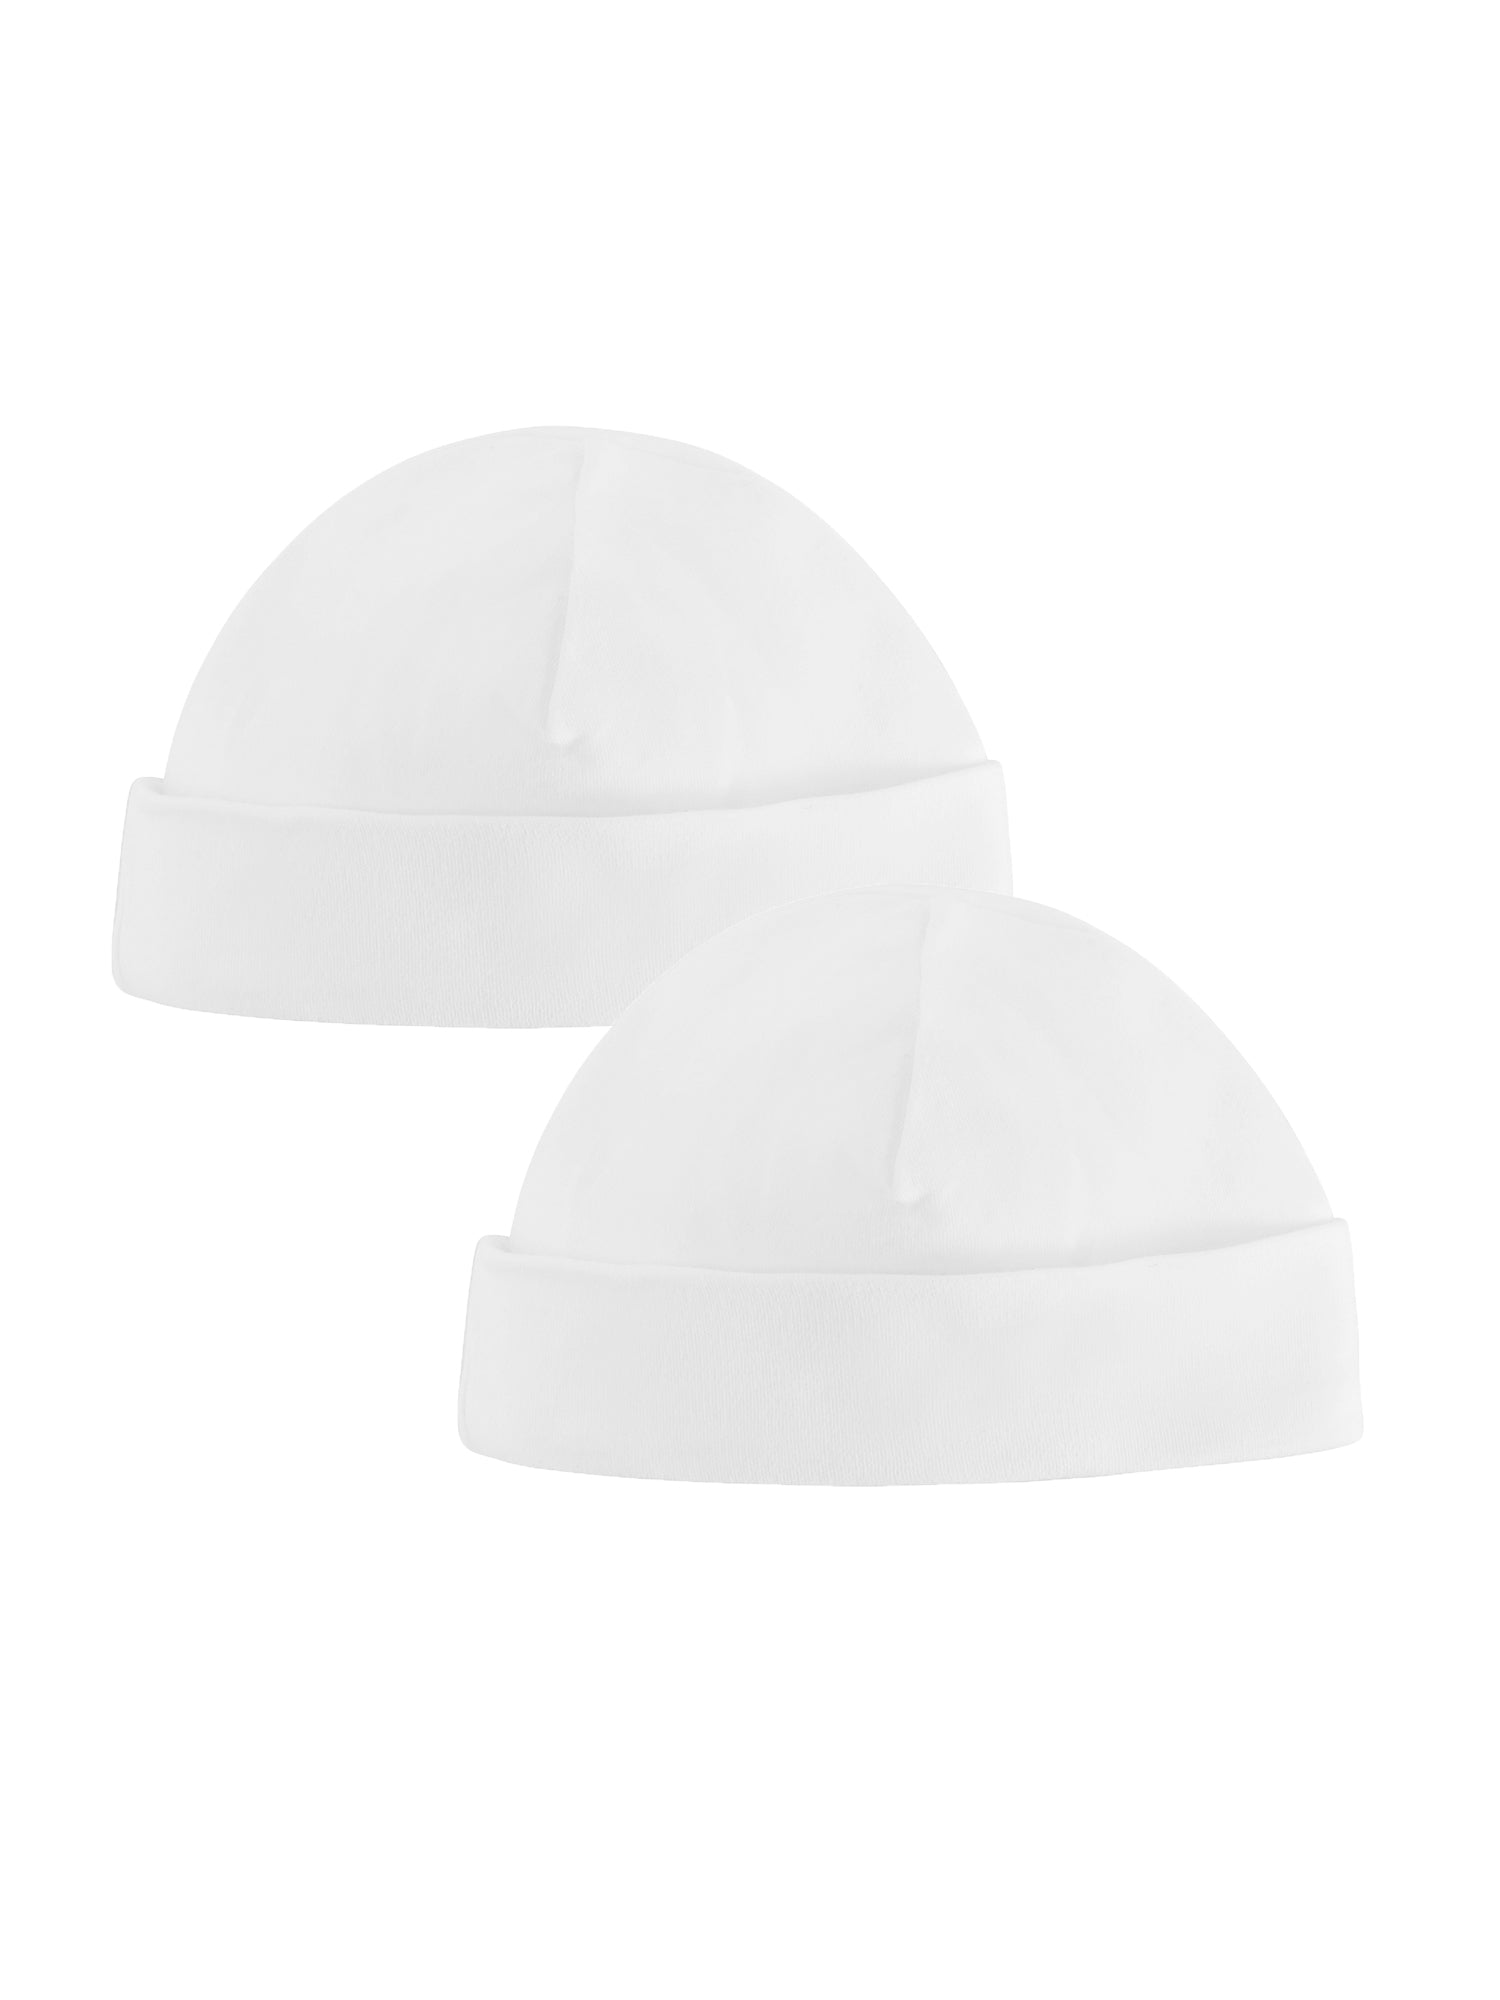 Organic Beanie | White Beanie Hat | Under Nile Value Pack